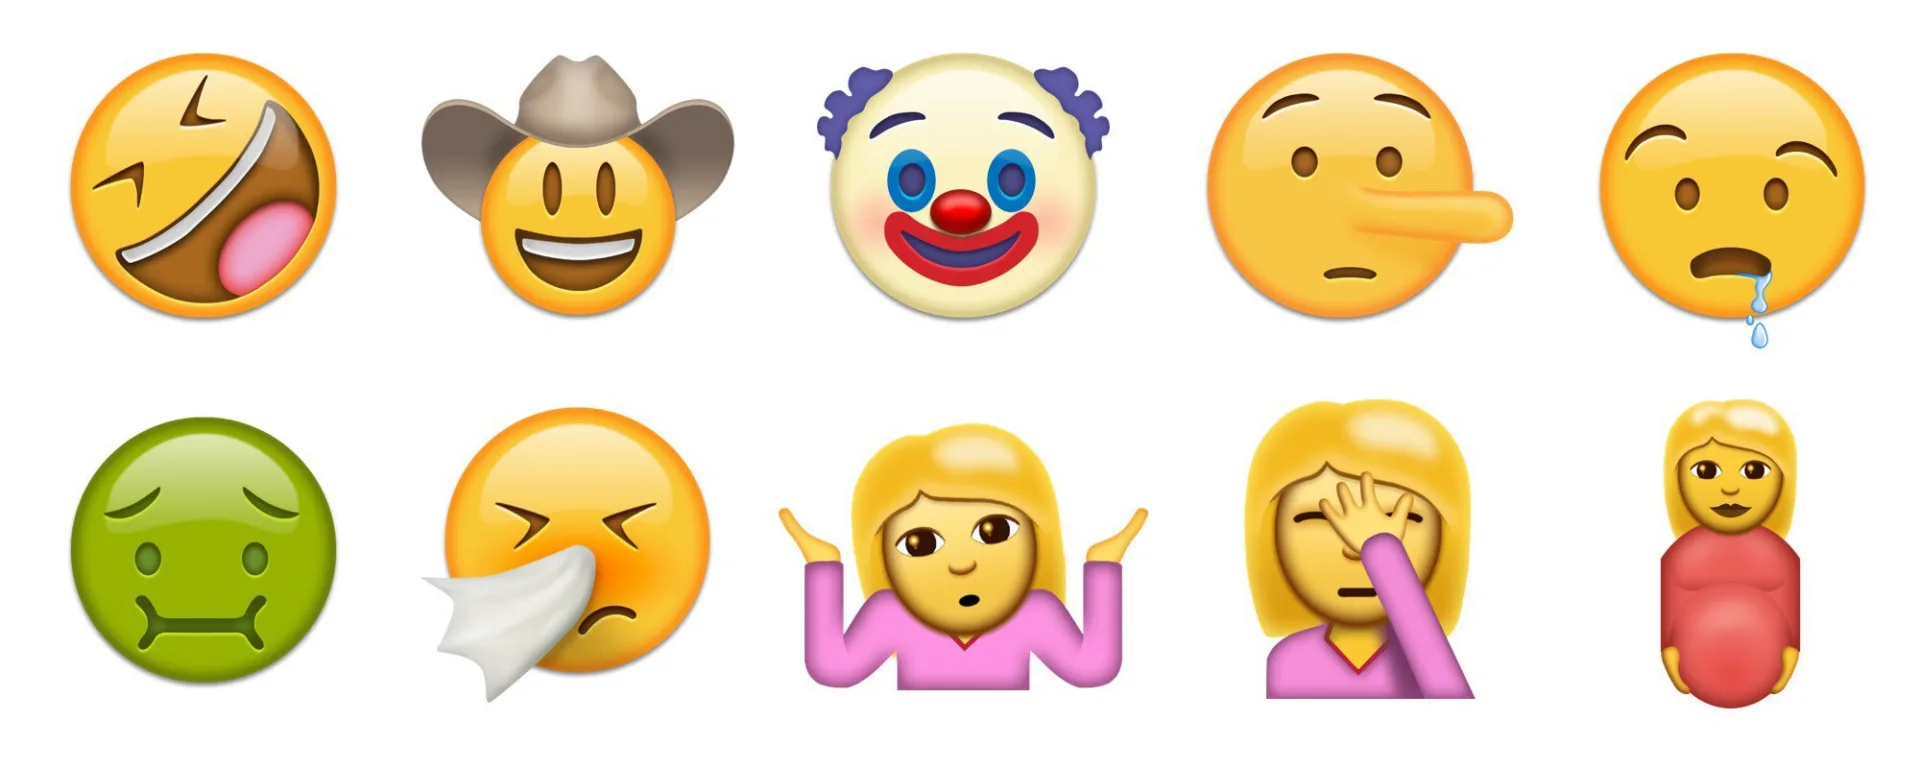 Unicode 9 faces emojipedia sample images1